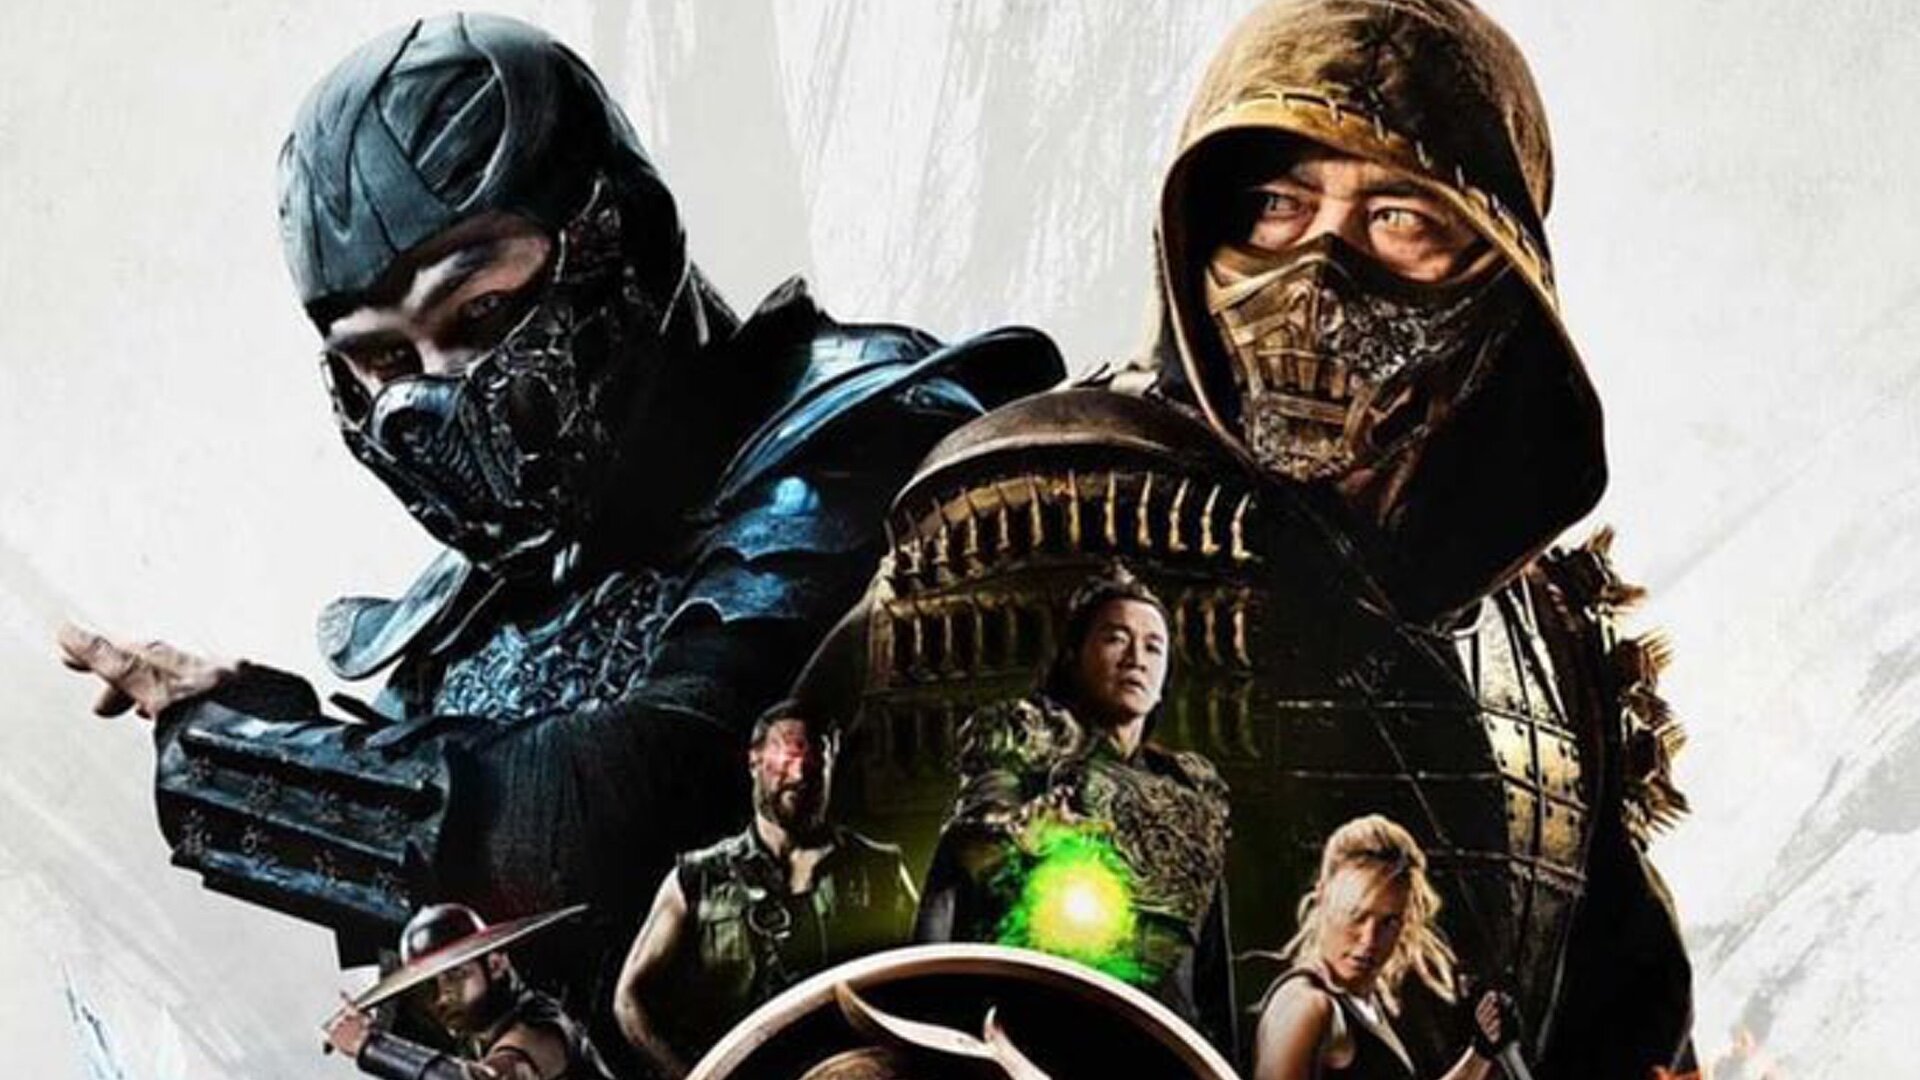 Scorpion, Mortal Kombat X, gaming, movie, film, video game, Hanzo